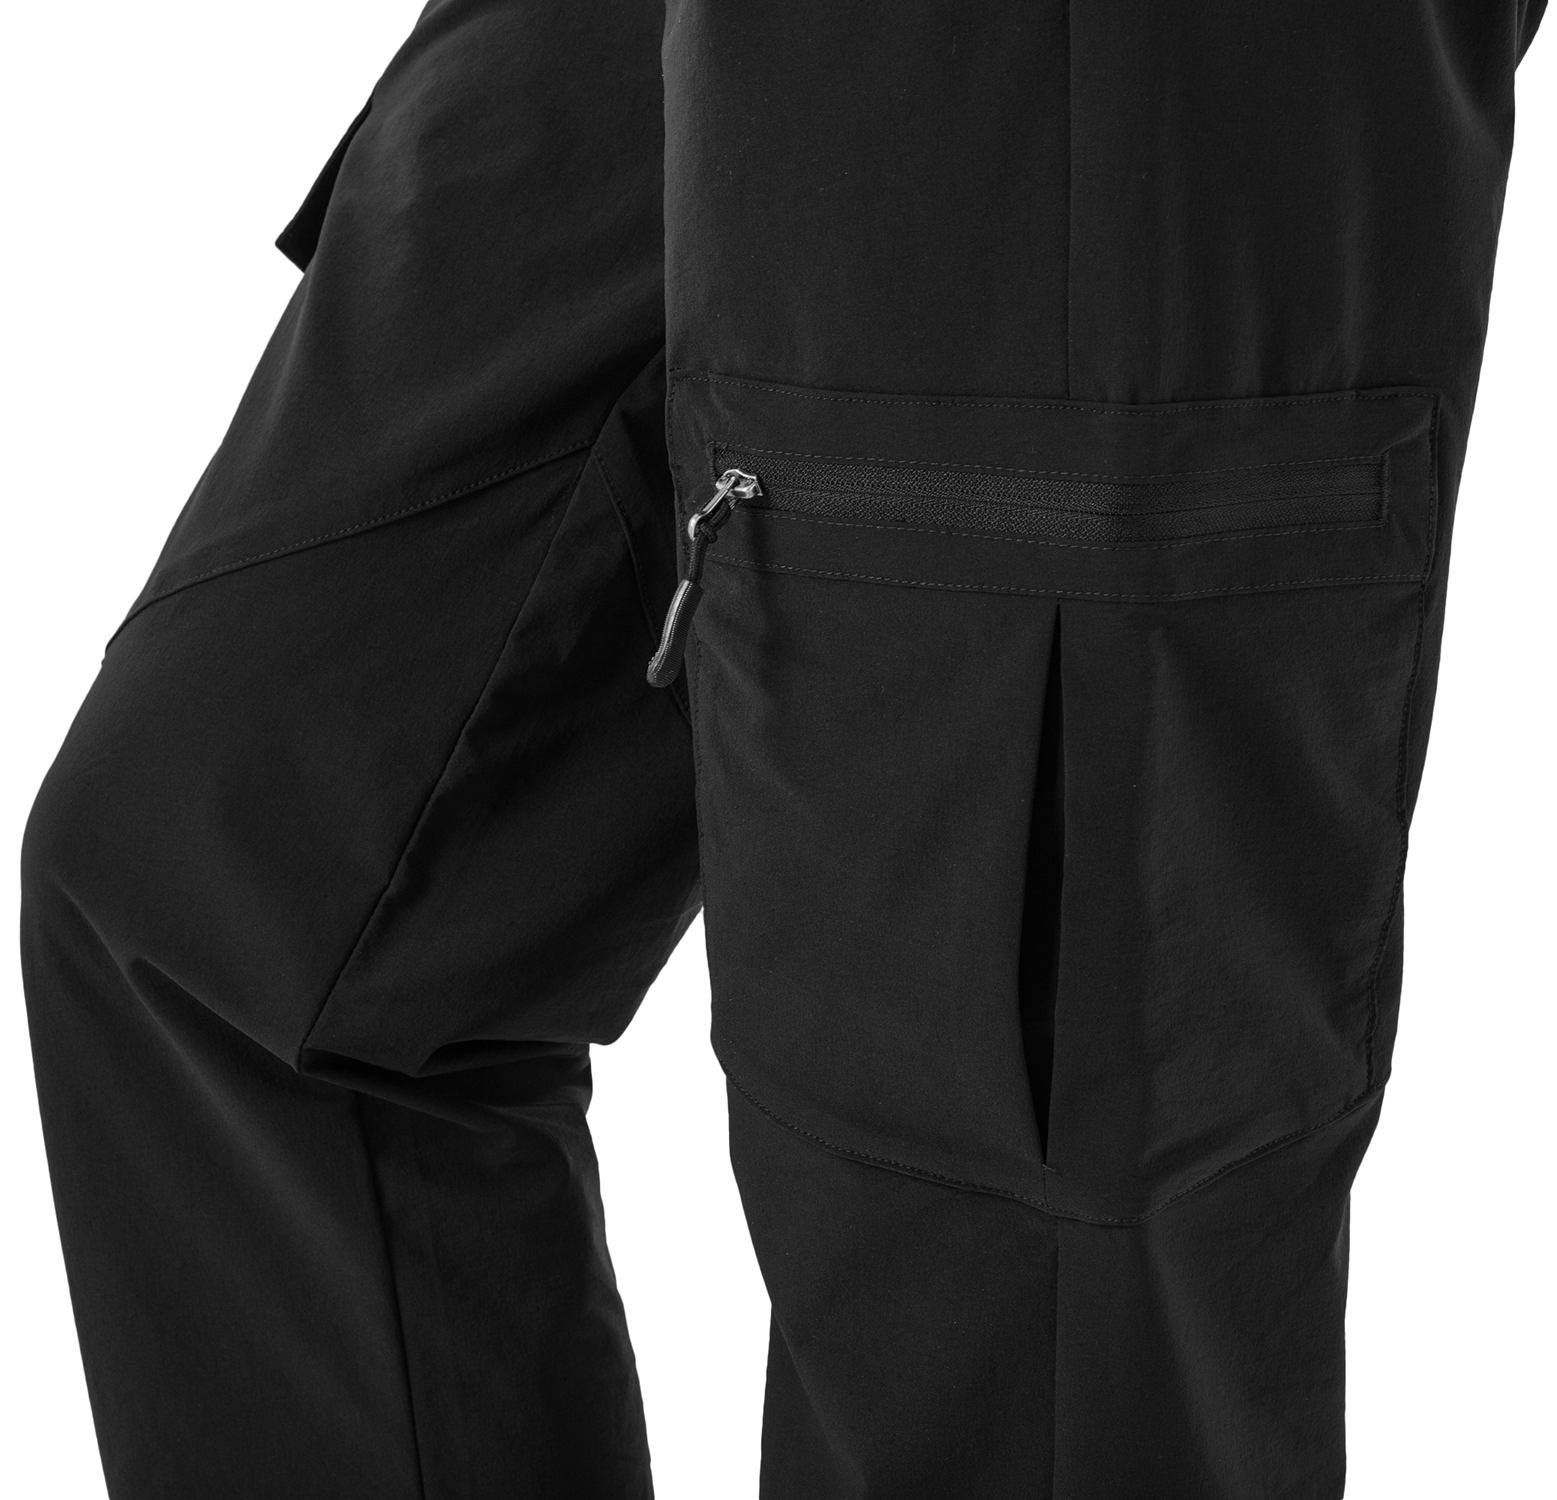 Rdruko Women's Hiking Cargo Pants Lightweight Water-Resistant Quick Dry UPF 50+ Travel Work Pants Zipper Pockets Black Large